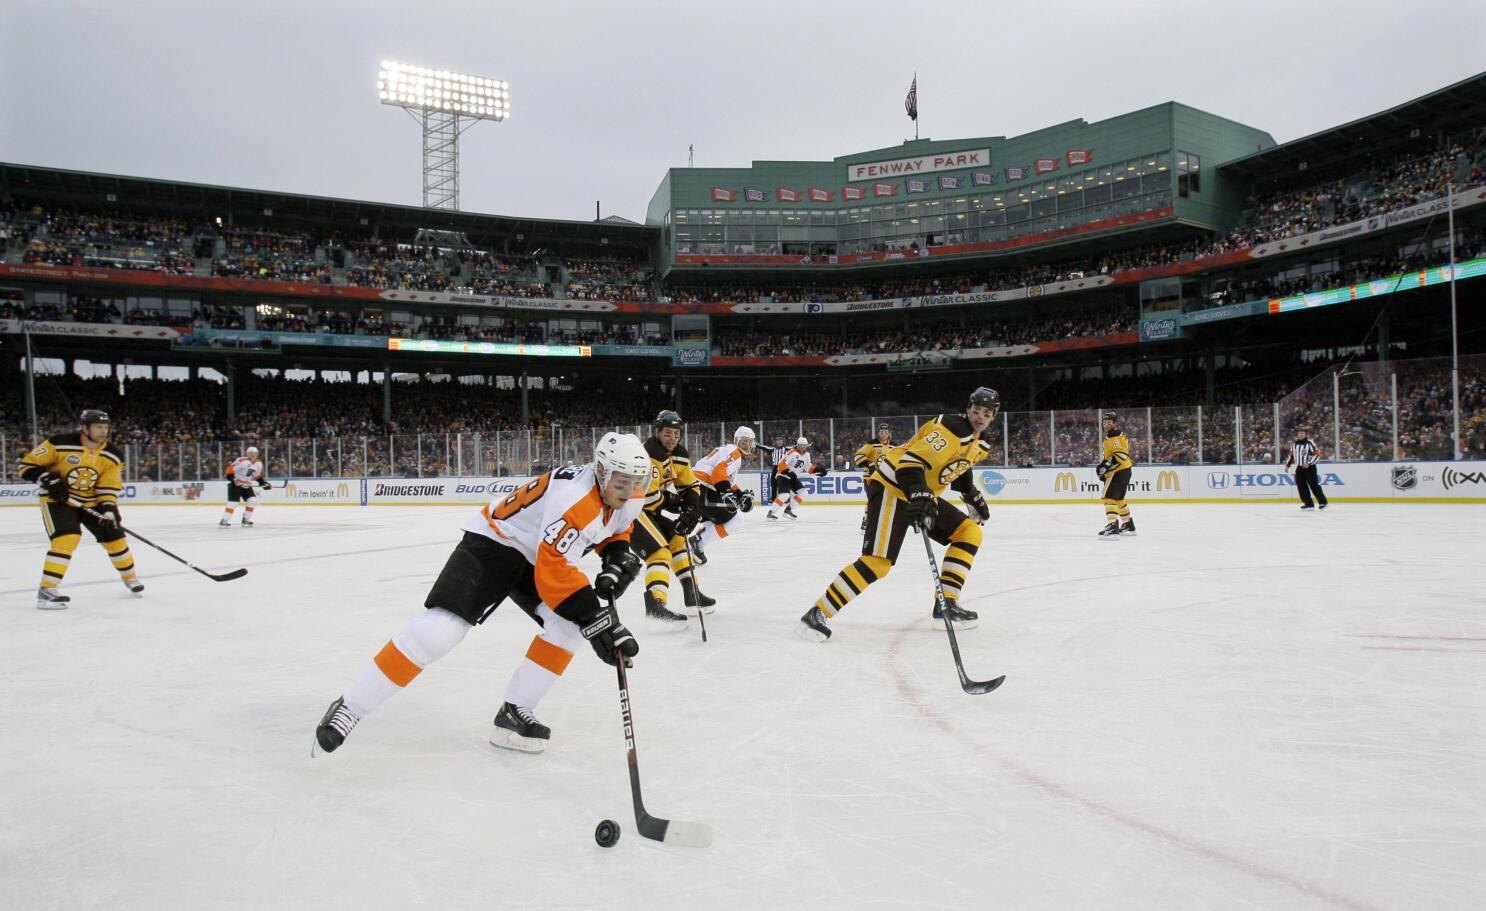 2010 WINTER CLASSIC NHL HOCKEY PROGRAM-BRAND NEW-BOSTON BRUINS